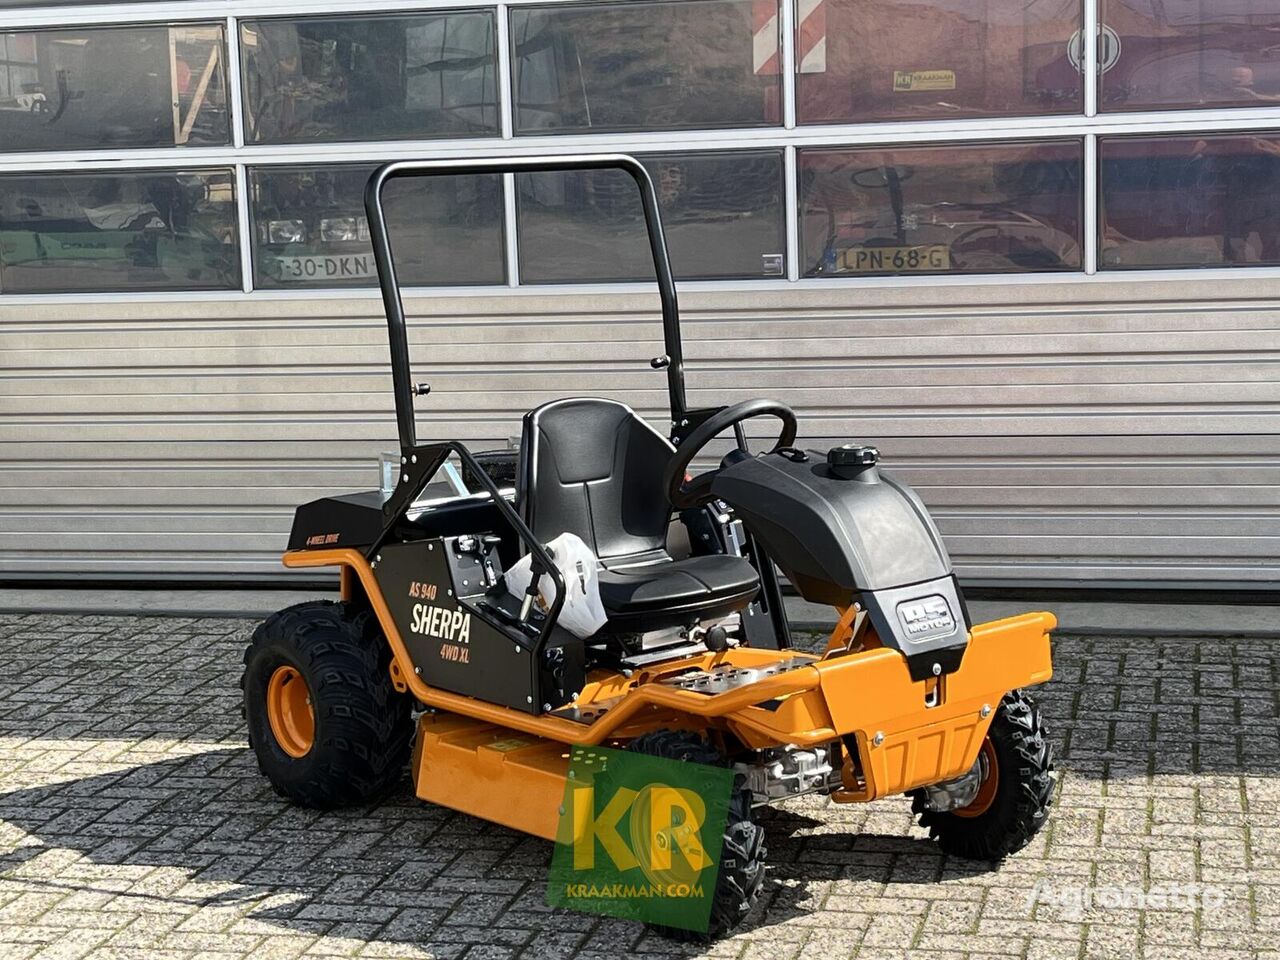 novi AS 940 sherpa 4 WD XL B&S traktor kosilica